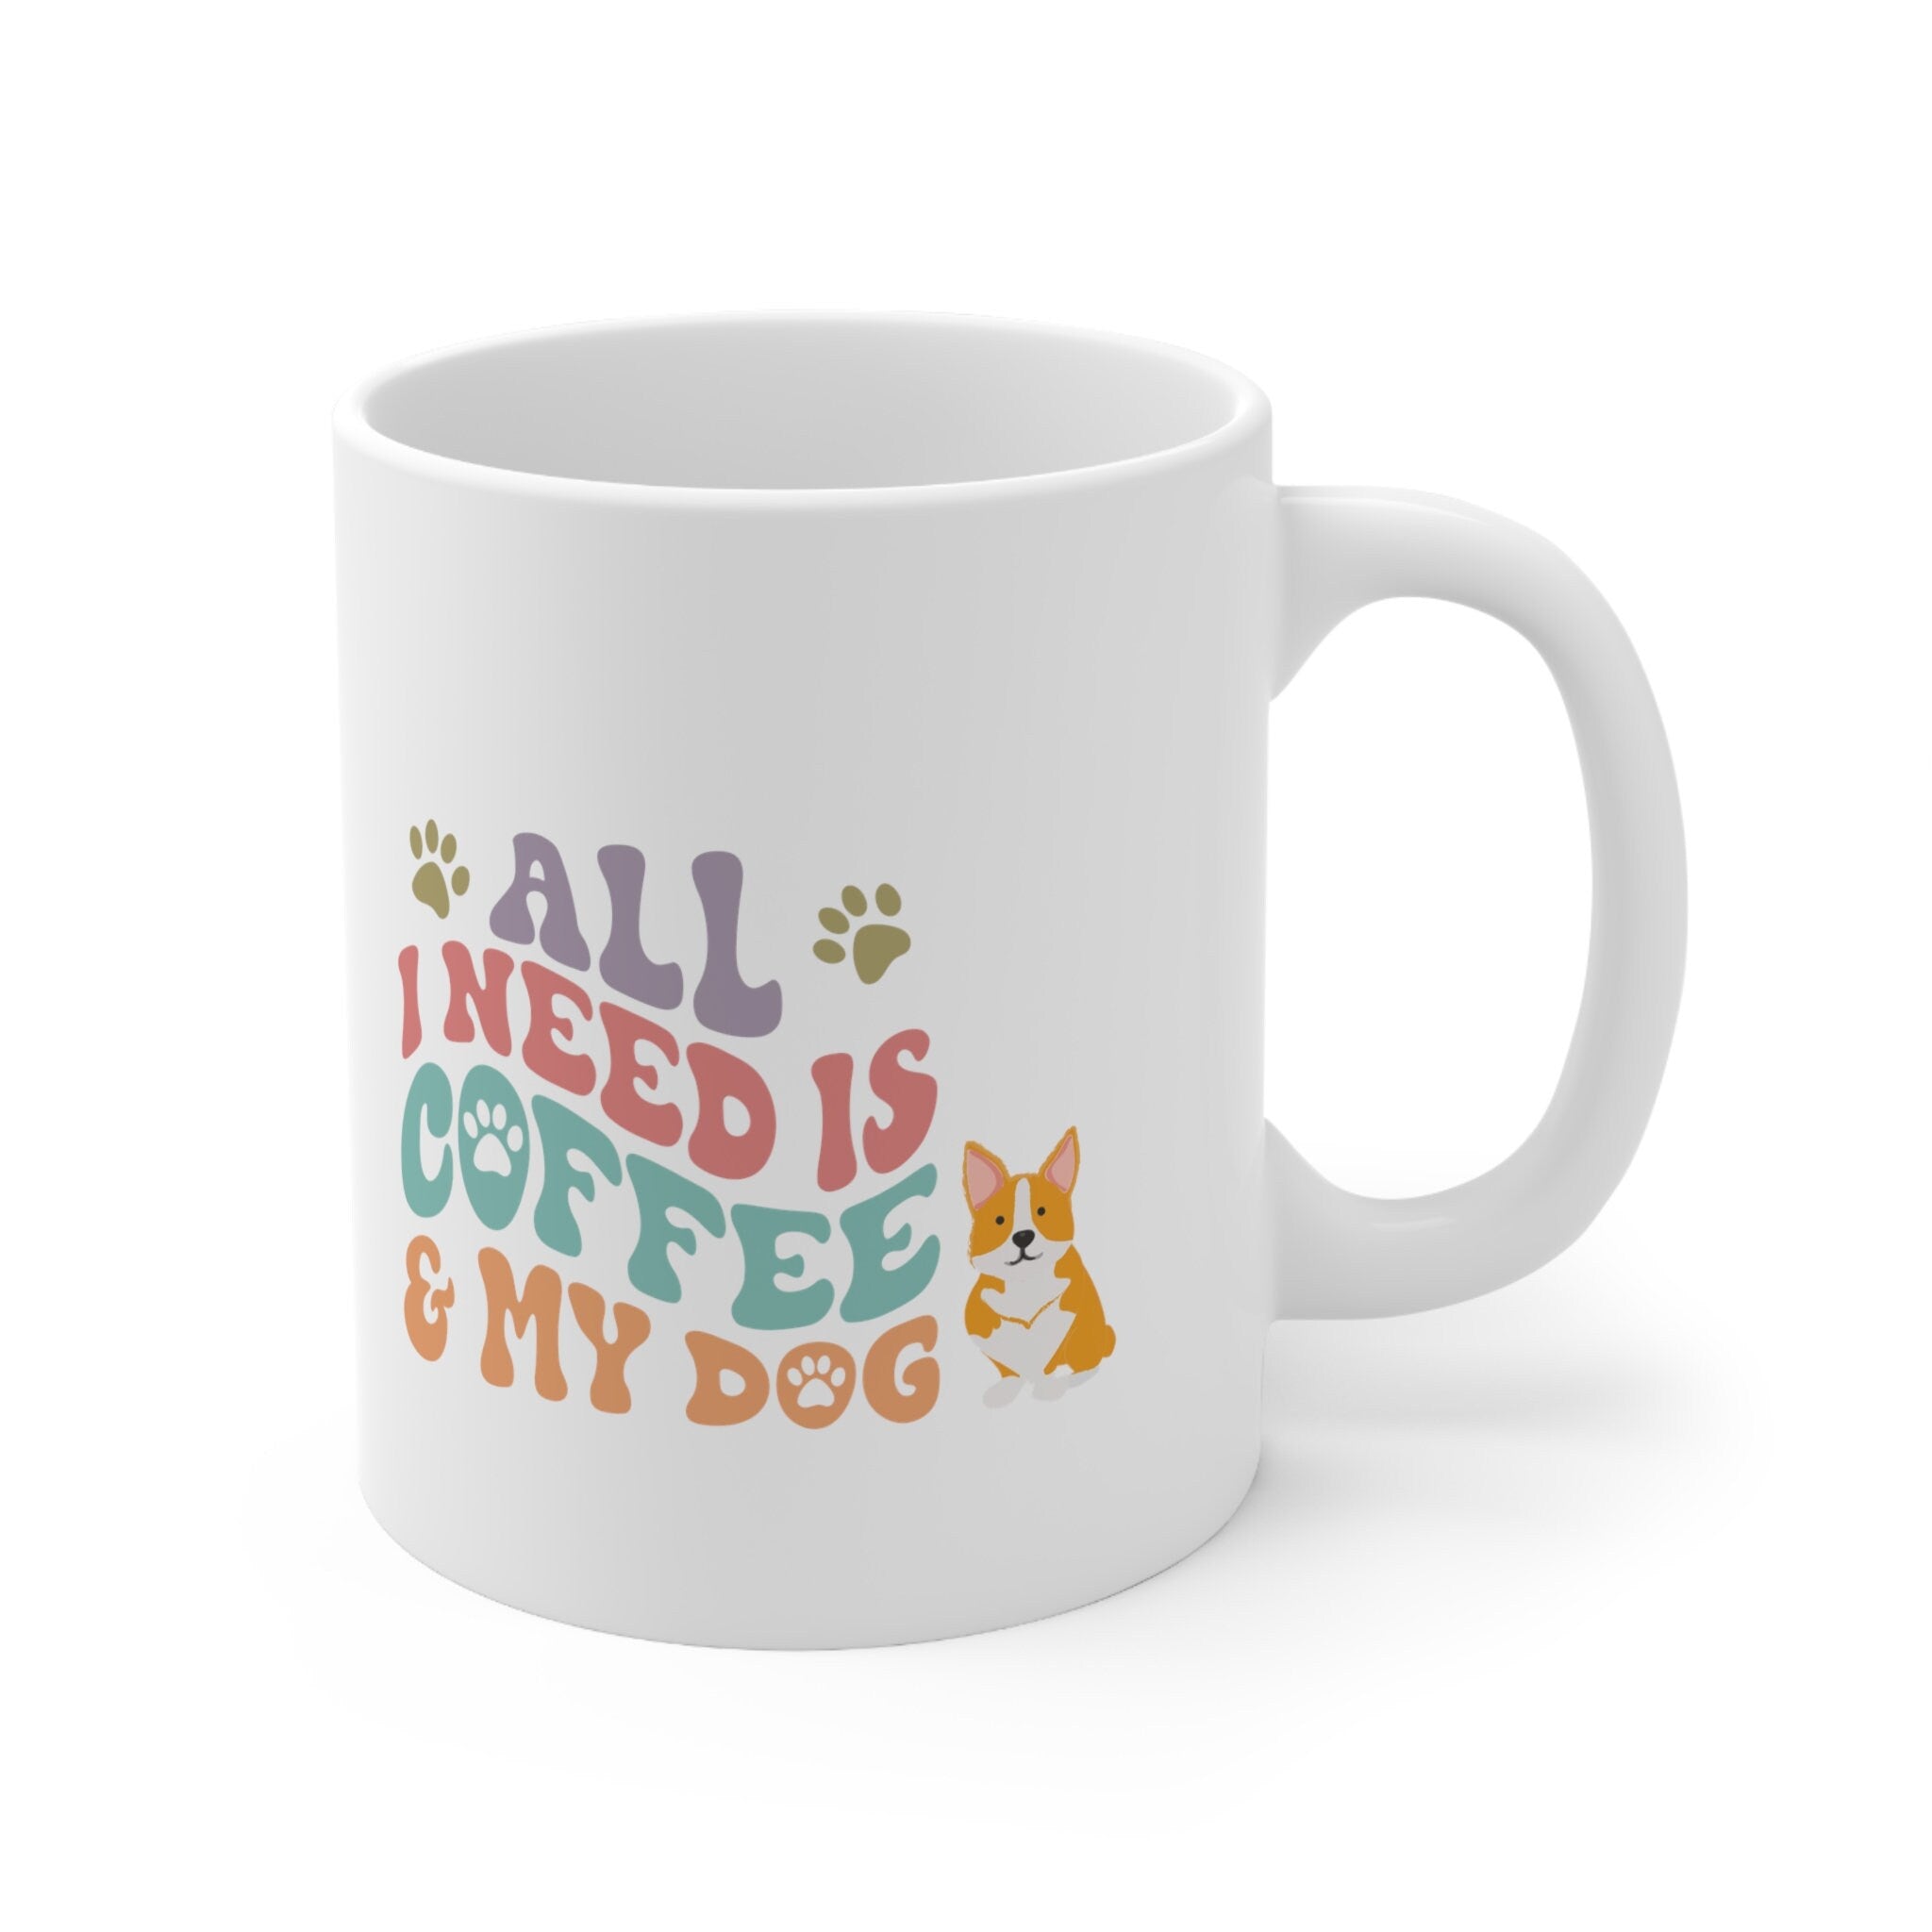 Corgi Ceramic Mug Gift for Her, Him, Corgi dog Lovers Christmas Gift For Best Friend, corgi dad, corgi gift, corgi lover, corgi mom Gift